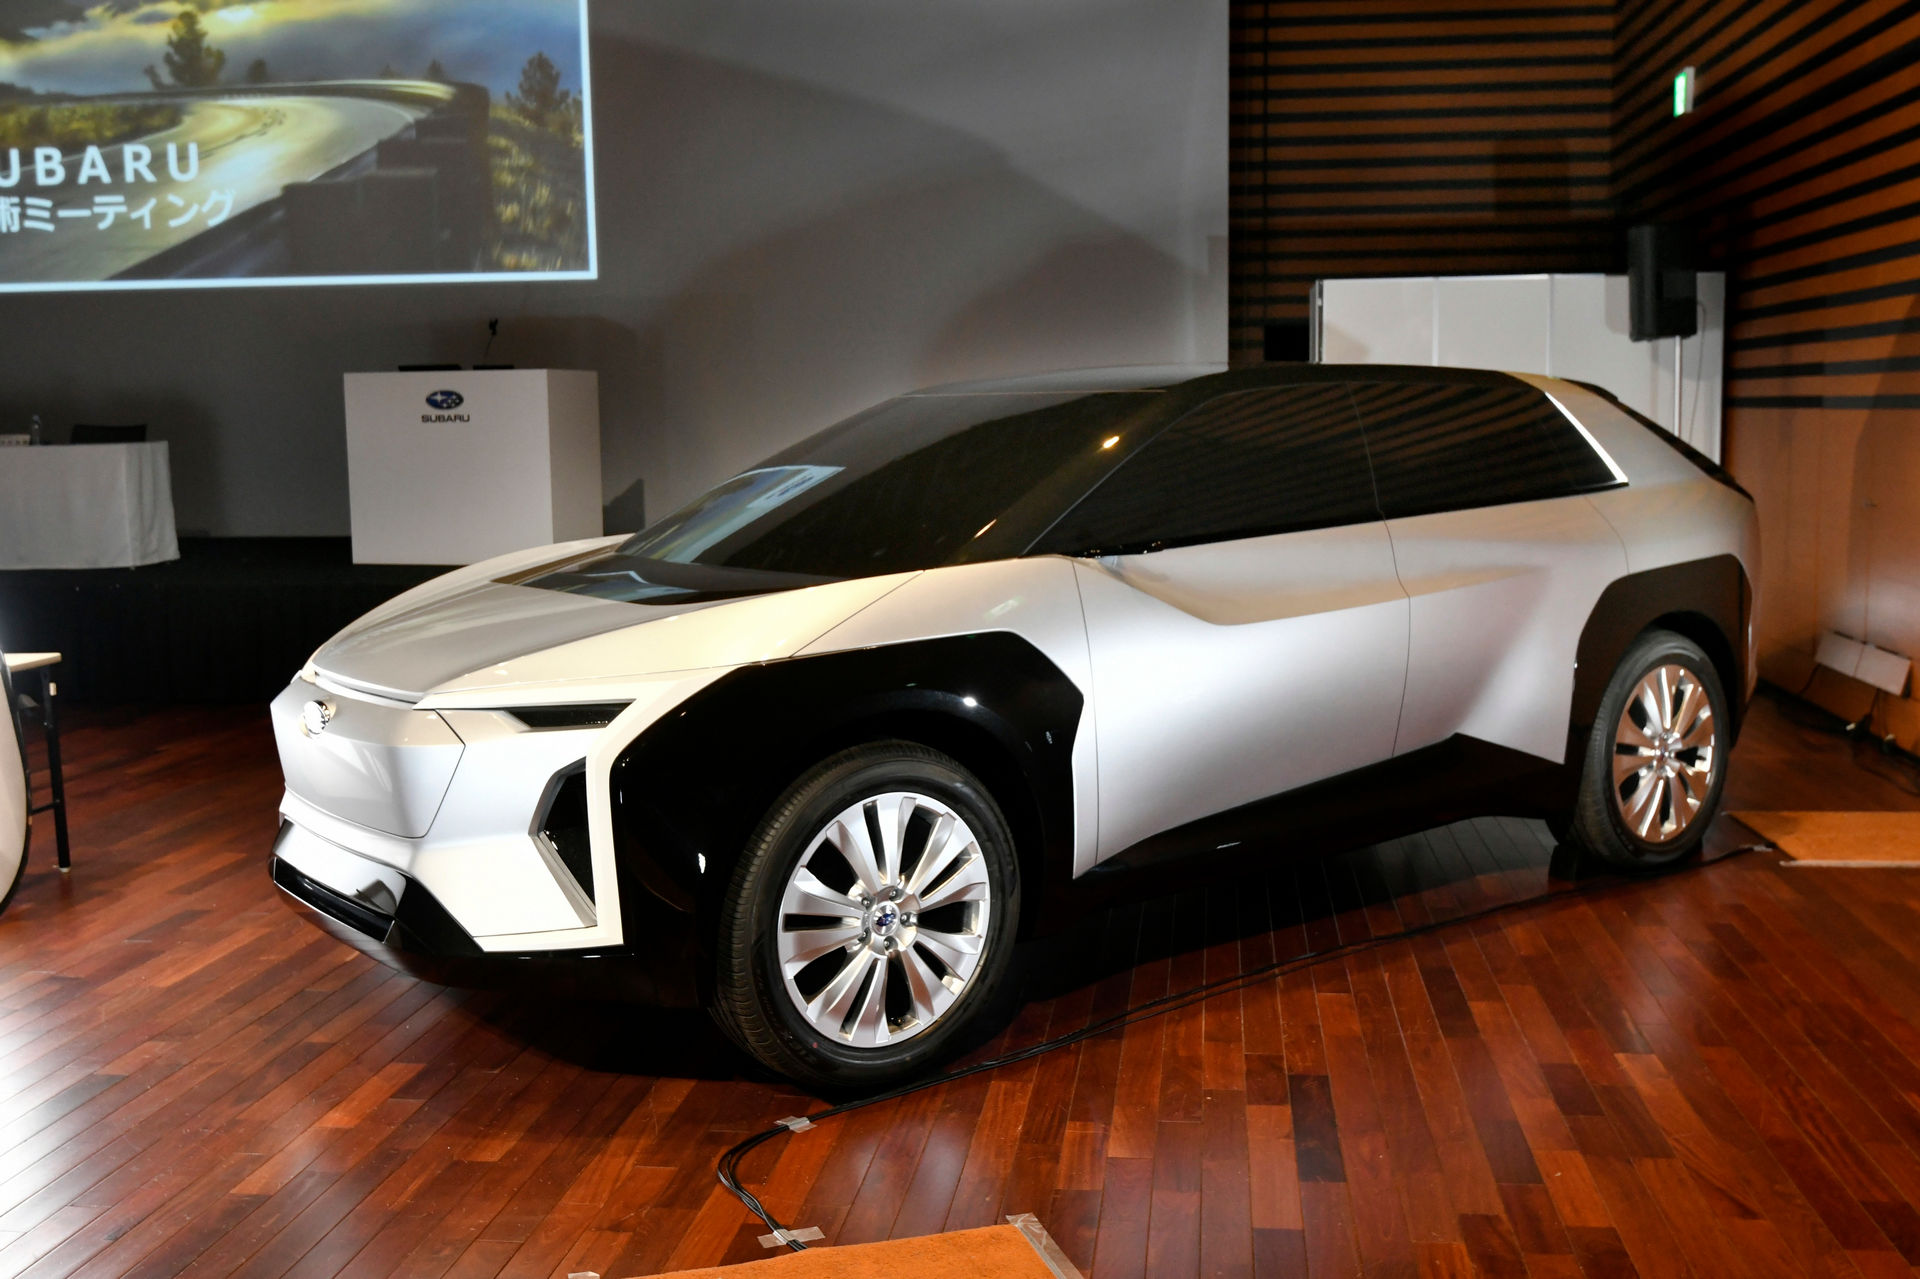 Subaru electric car (Evoltis) enters production in 2022 - Report